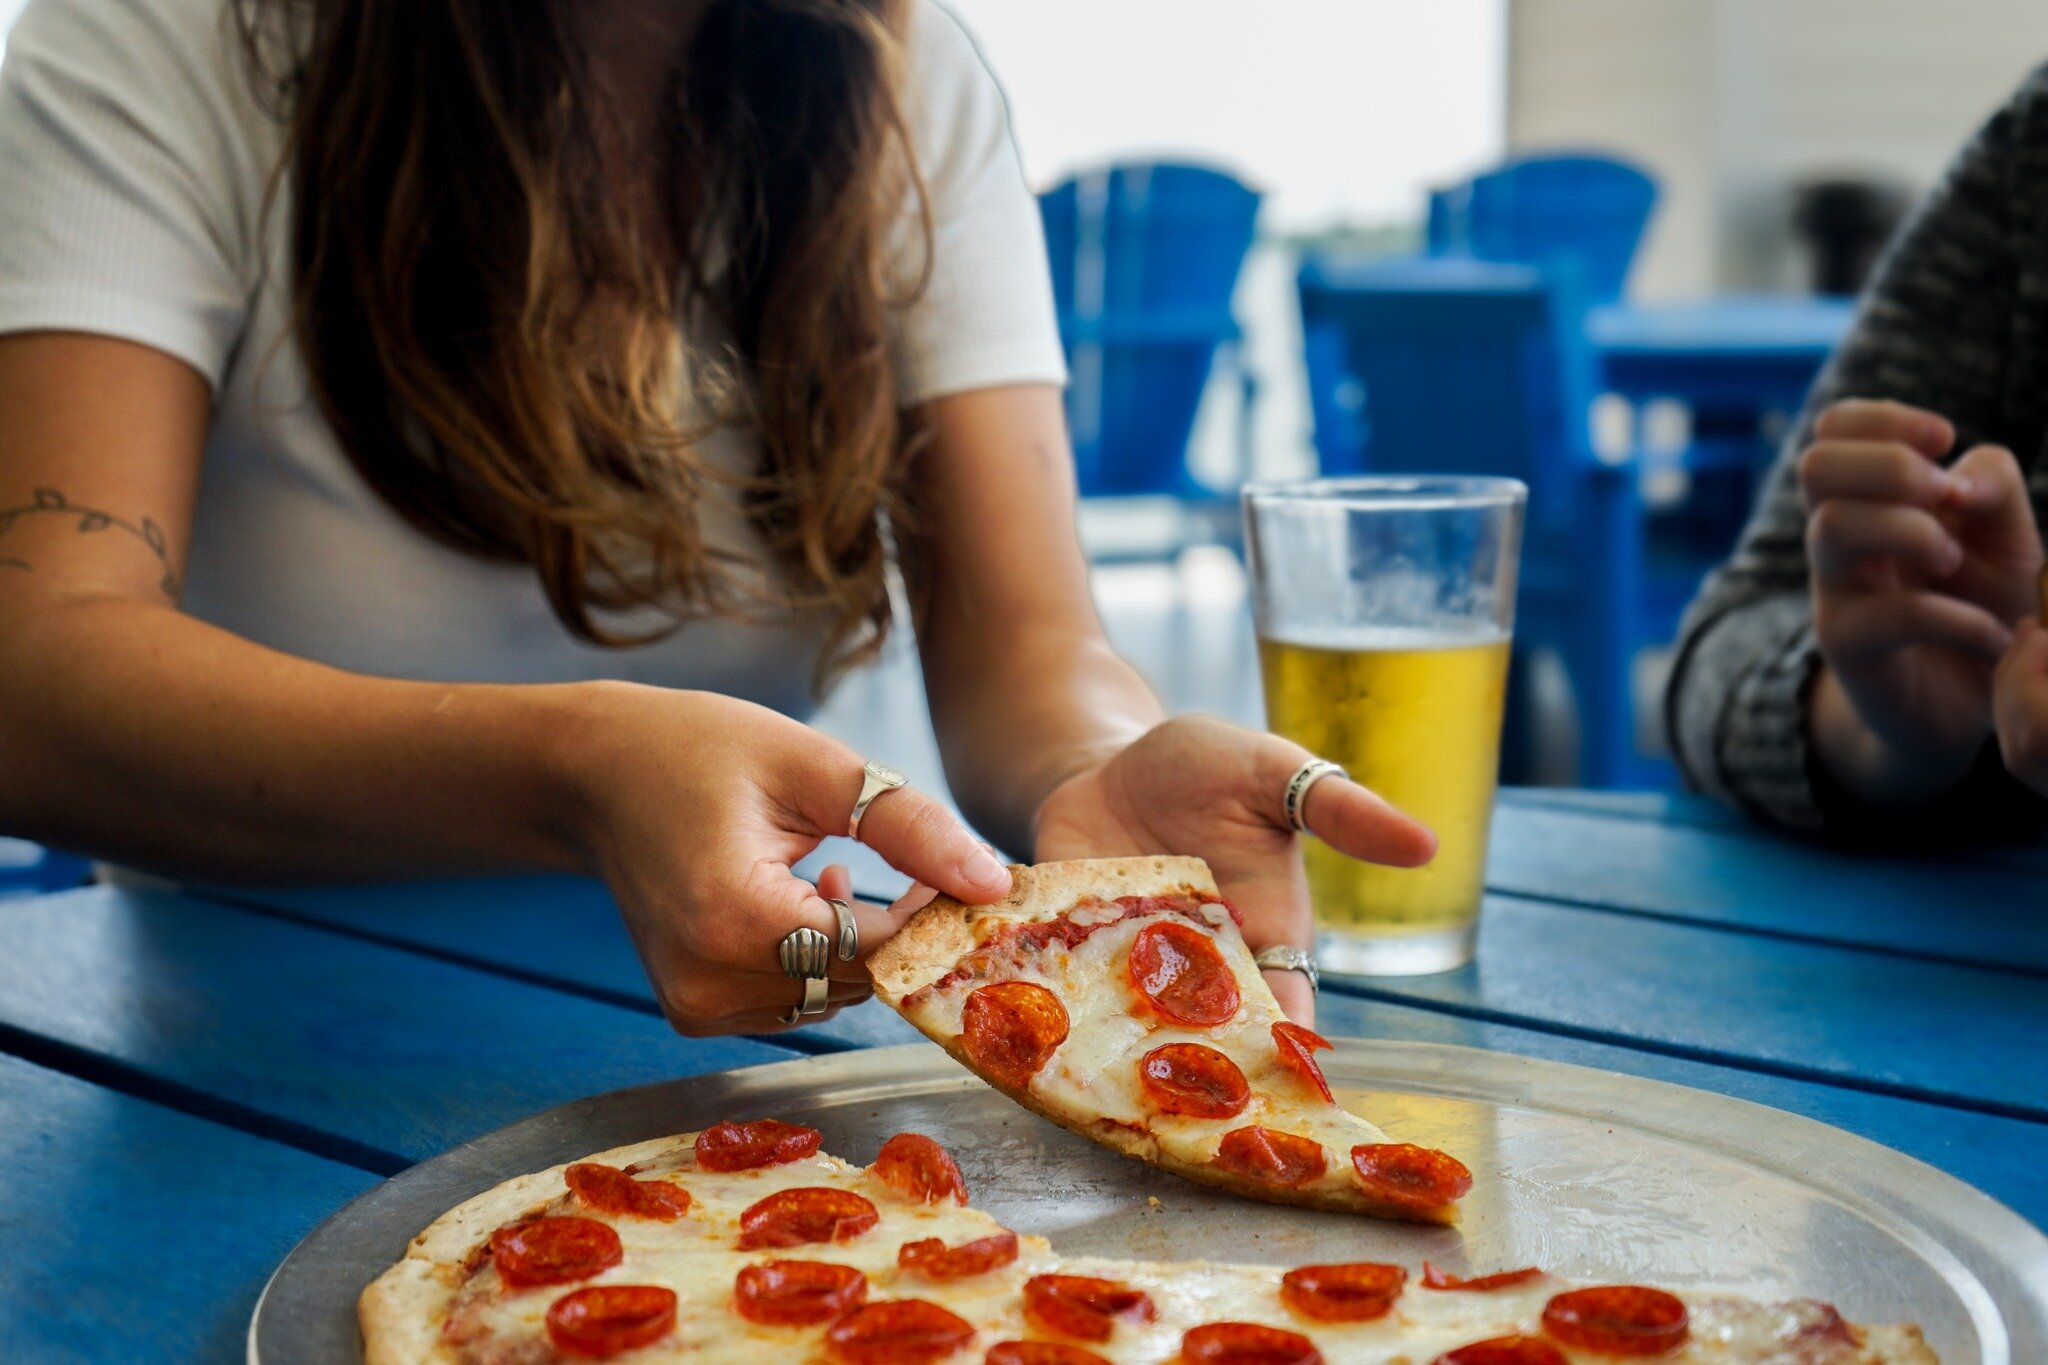 Everyday is a good day for pizza... and we've got your favorite!🍕

margaritavilleresortbiloxi.com/
#margaritavilleresortbiloxi #biloxi #biloxims #gulfcoast #pizza #restaurantsinbiloxi #thingstodoinbiloxi